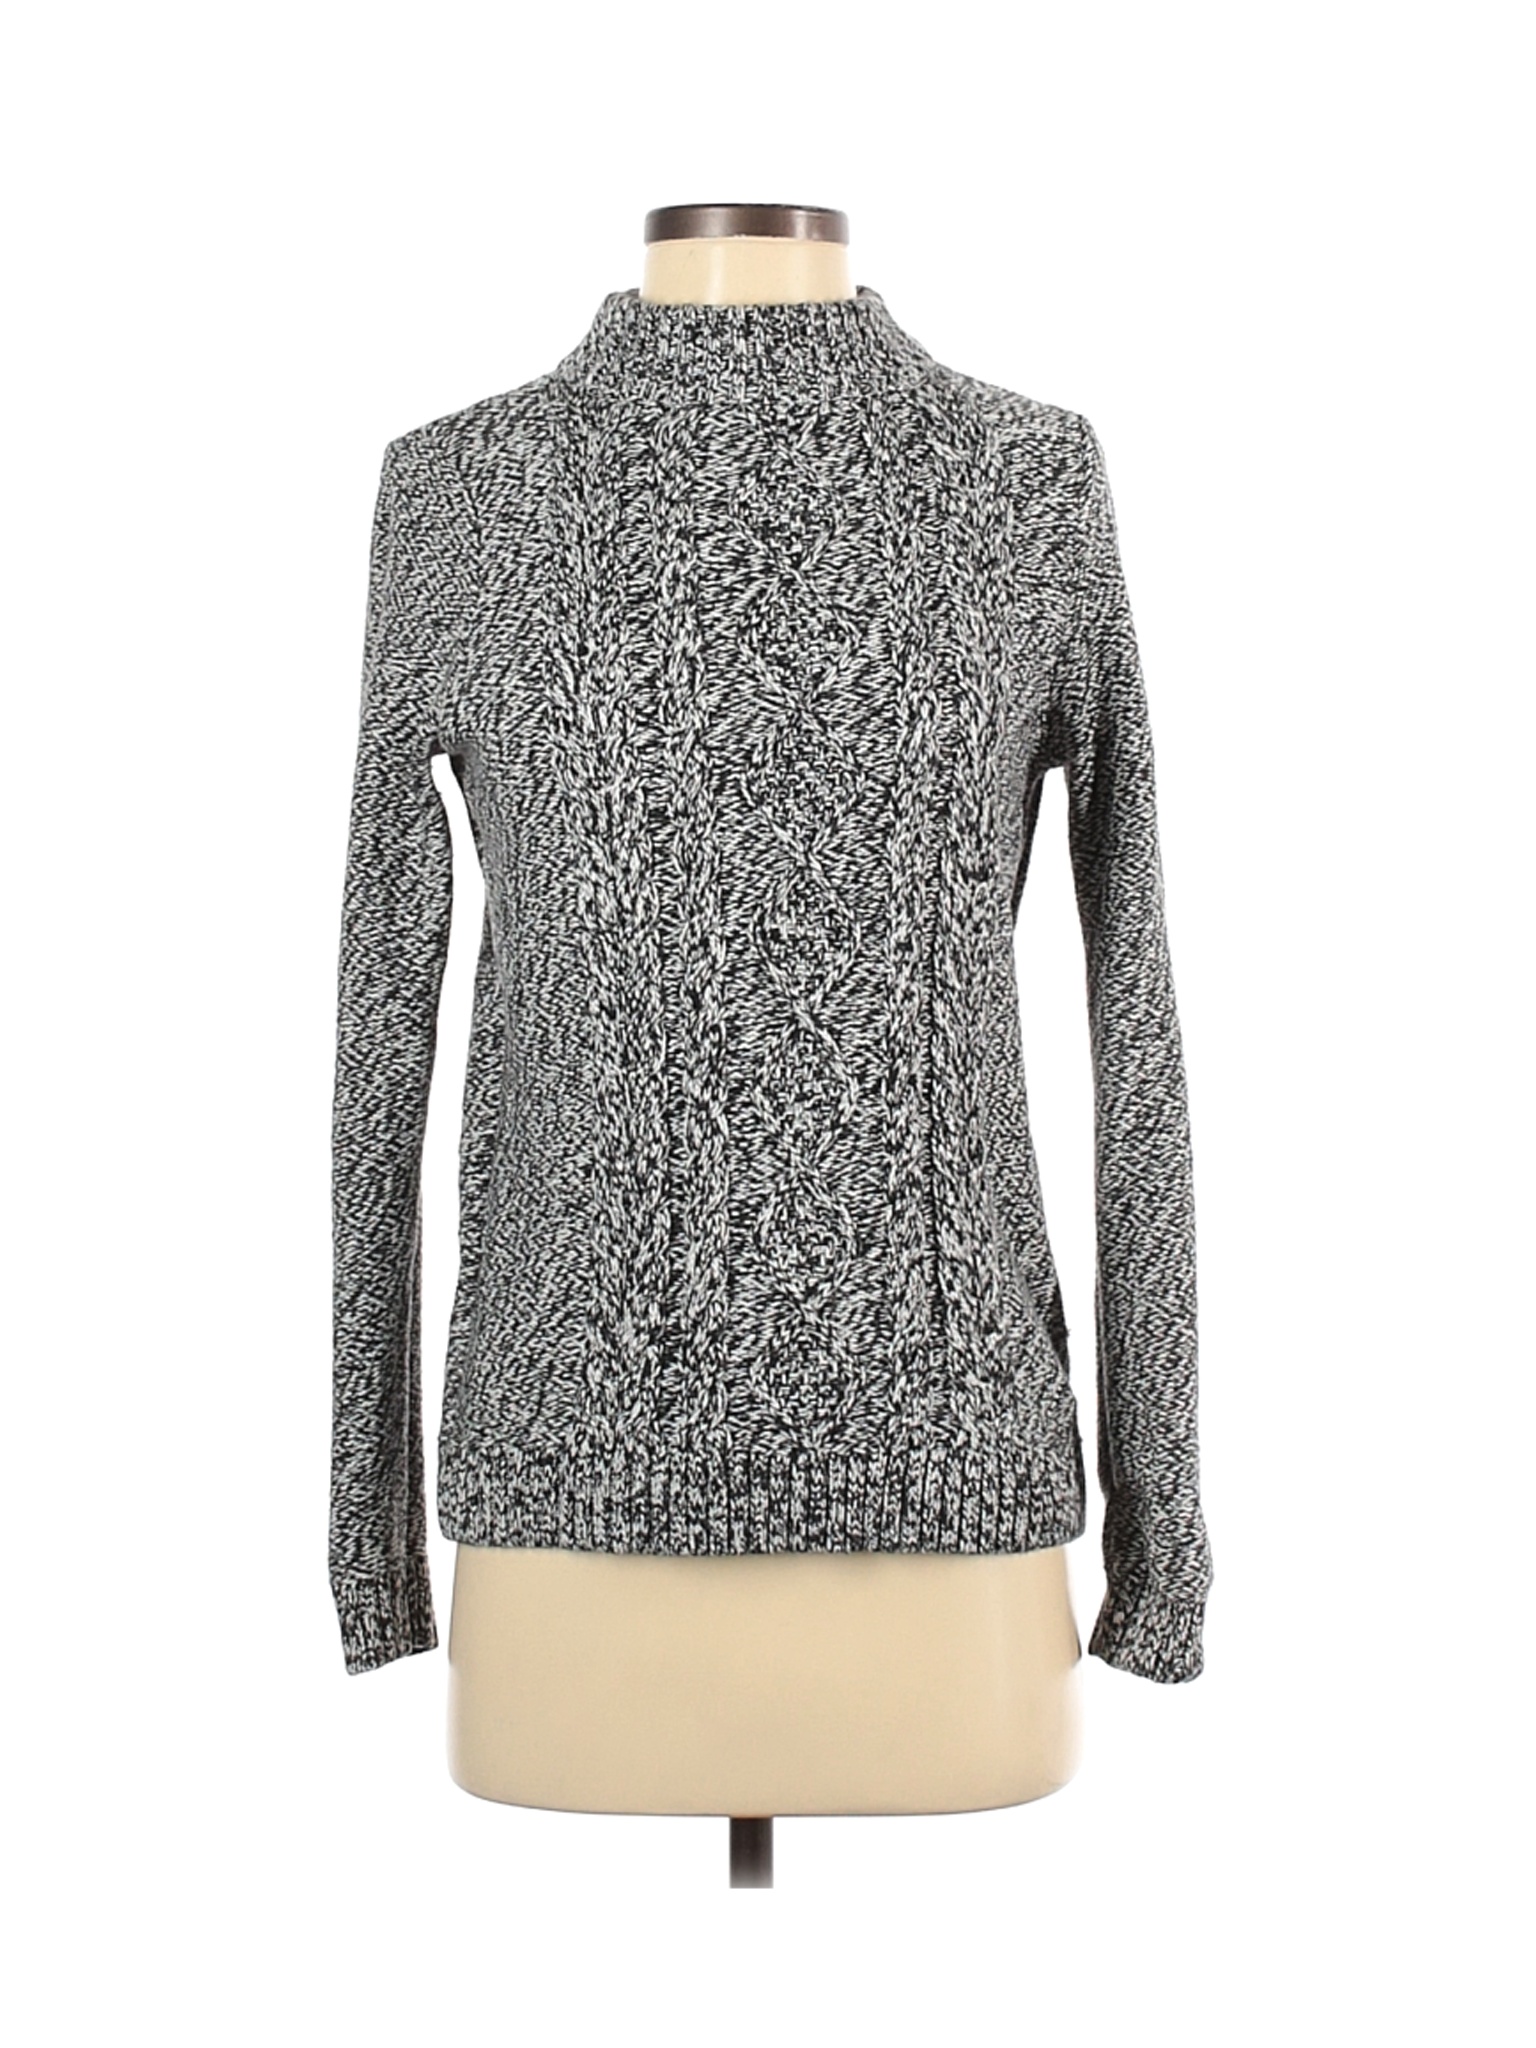 Lands' End Women Black Pullover Sweater XS | eBay